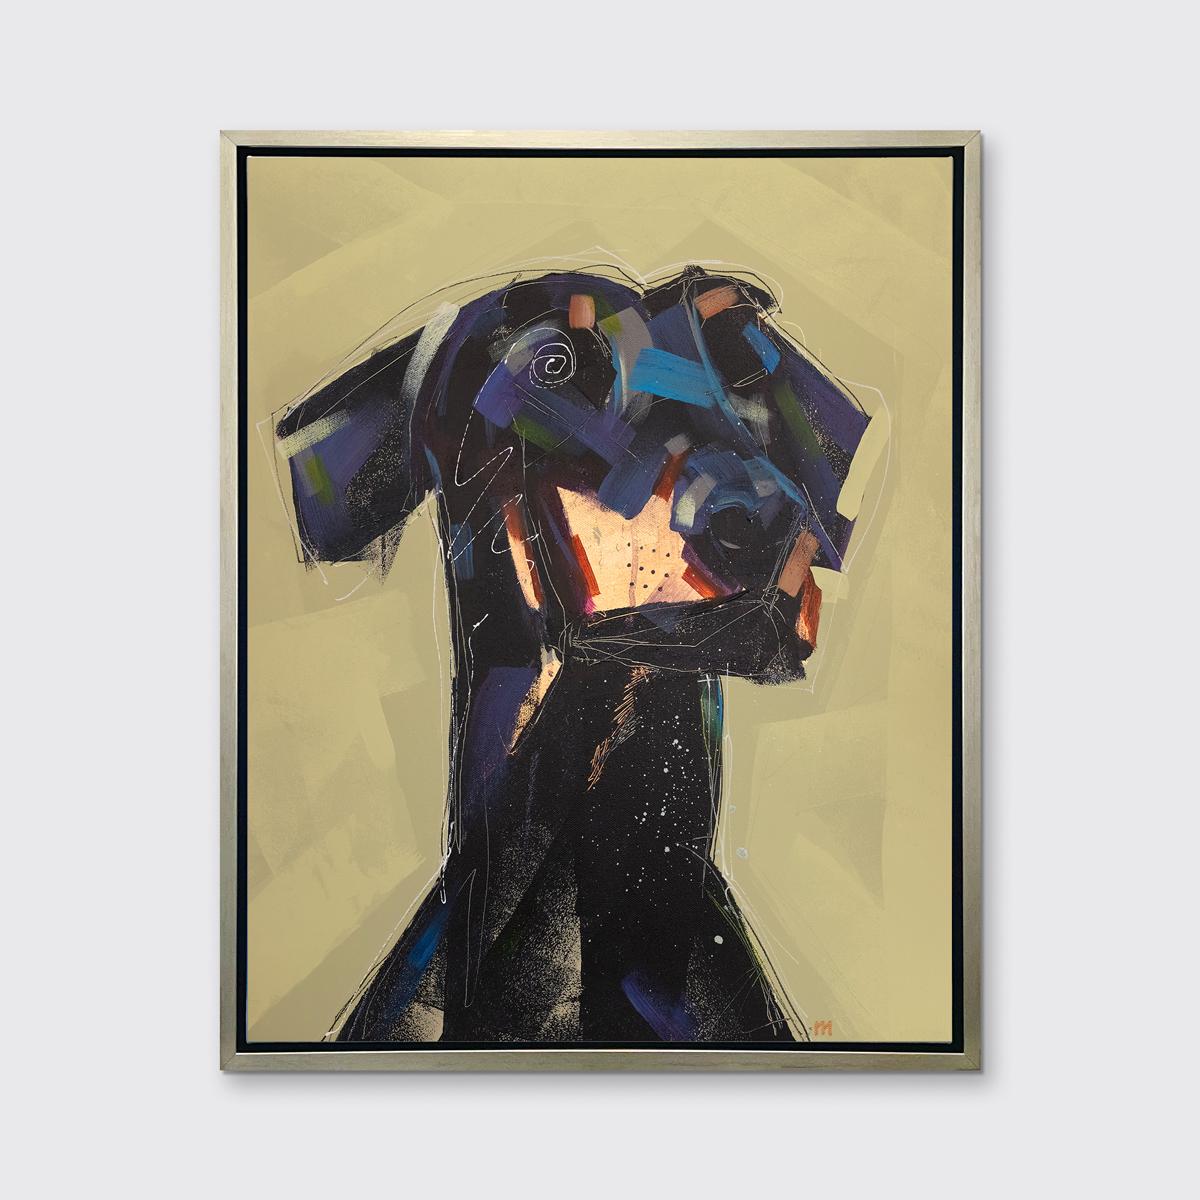 Russell Miyaki Abstract Print - "Doberman" Limited Edition Giclee Print, 30" x 24"